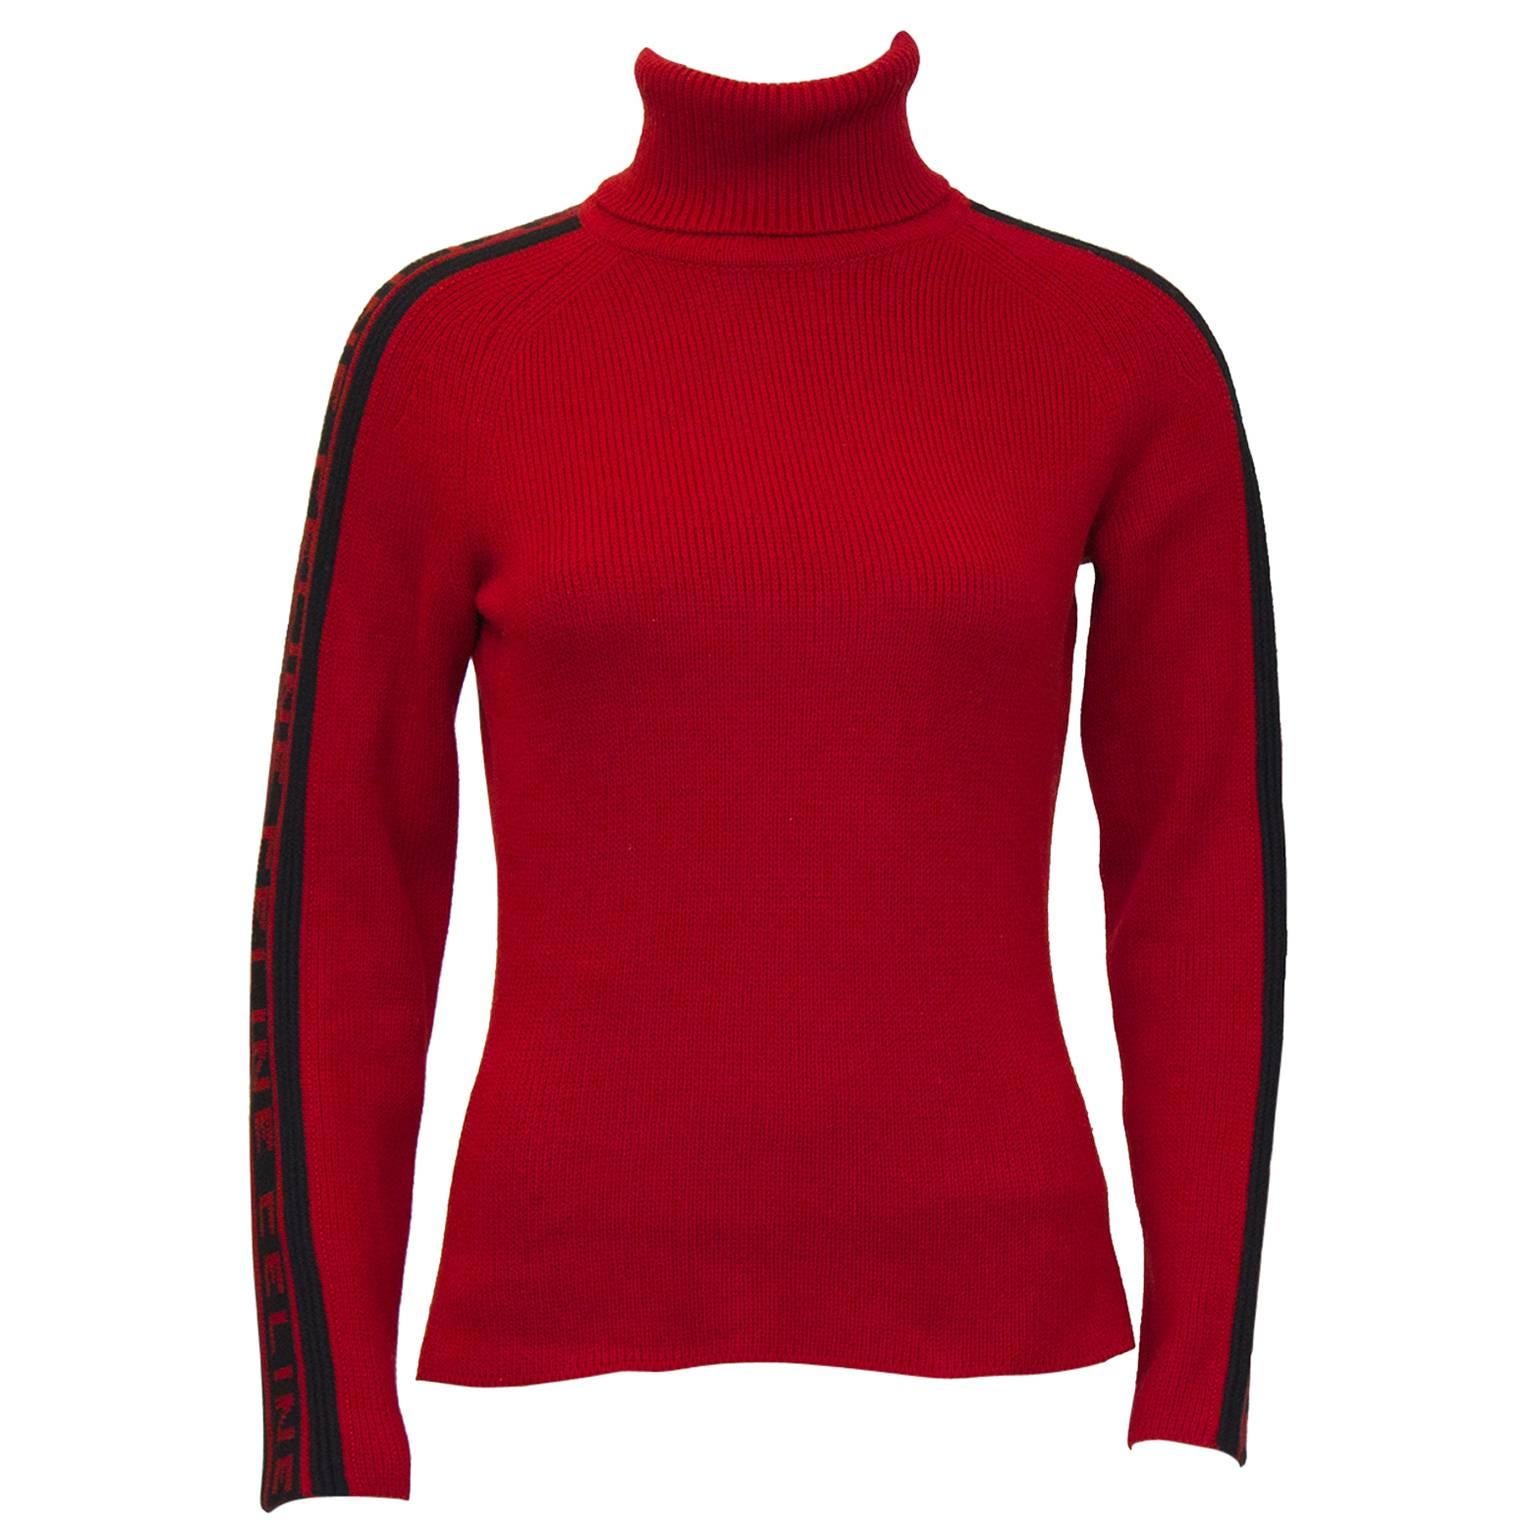 1990's Celine Cashmere Red and Black Turtleneck Sweater